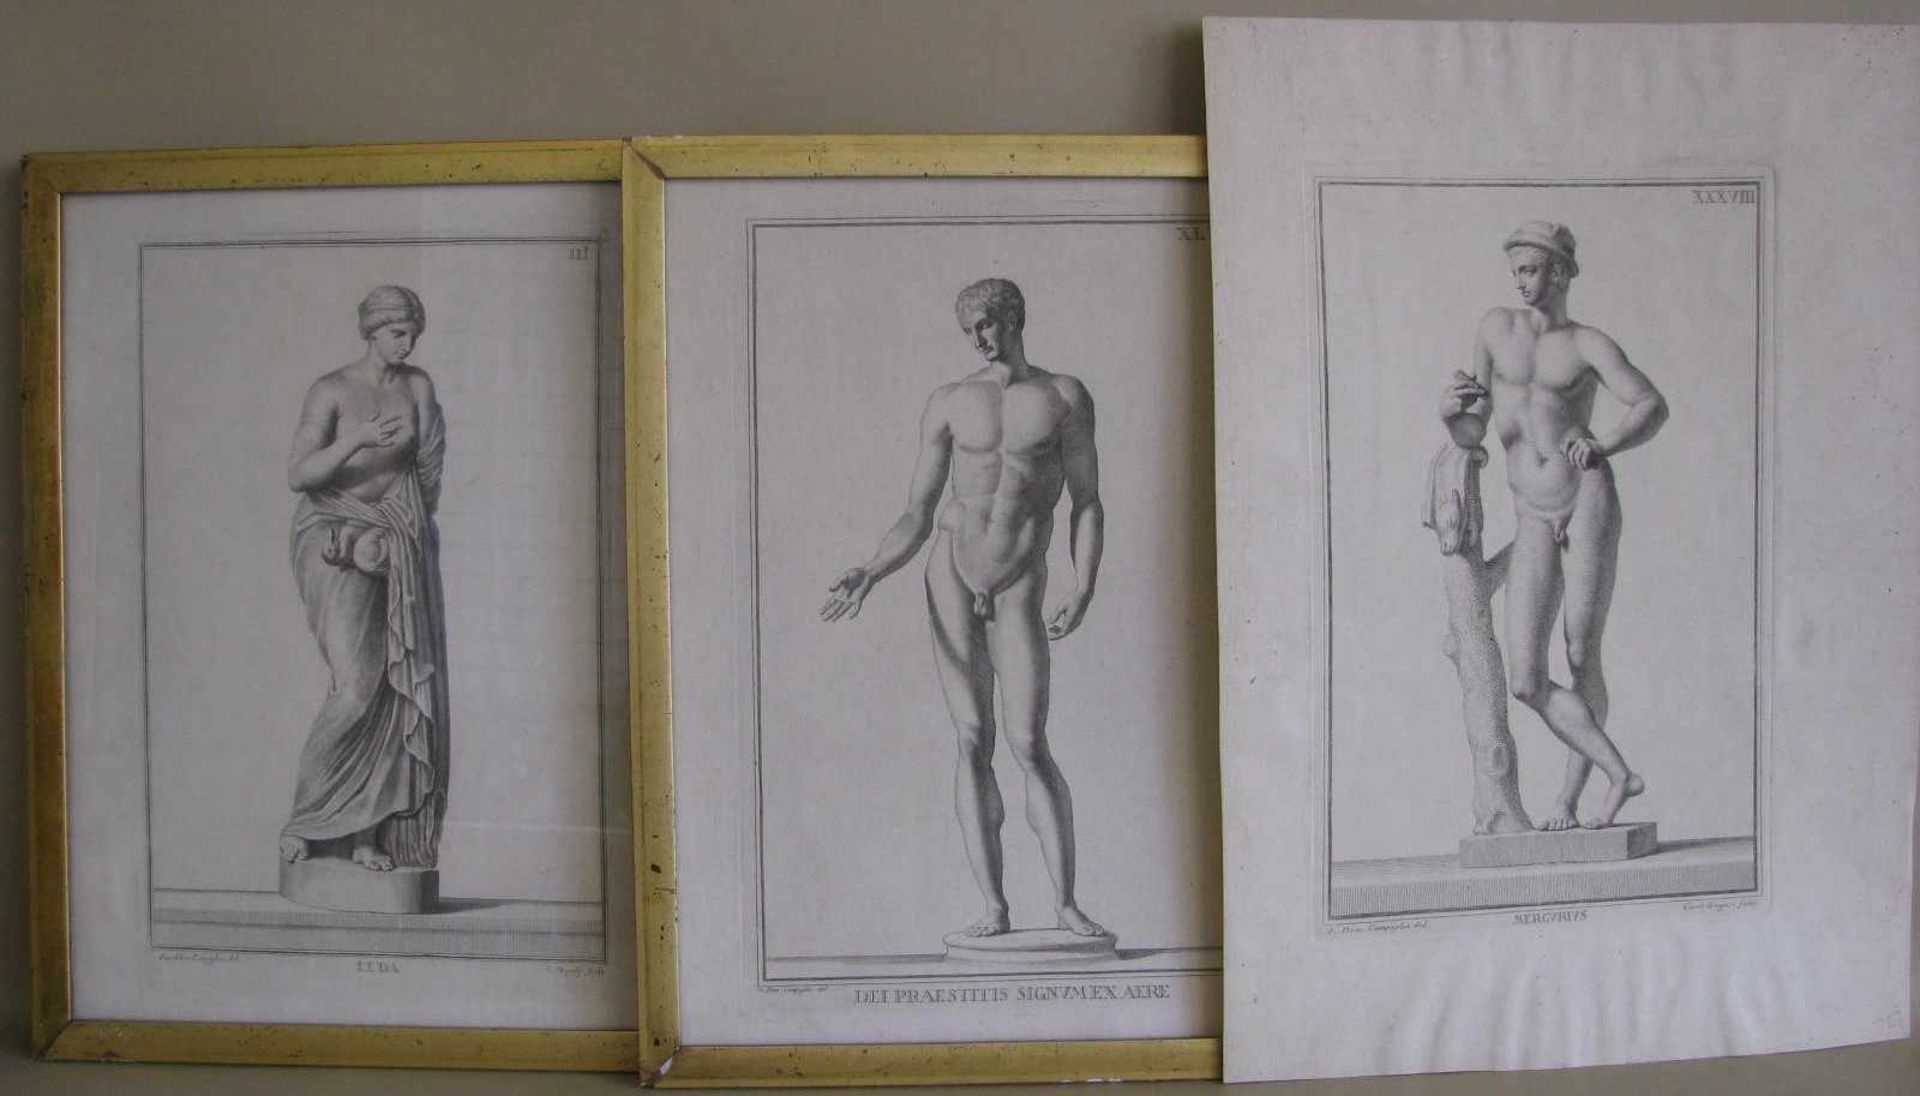 Gregori, Carol, Megalli und Campiglia, 3 antike Stiche, 'Männliche Akte', 35 x 22 cm, 2 x R./1x o.